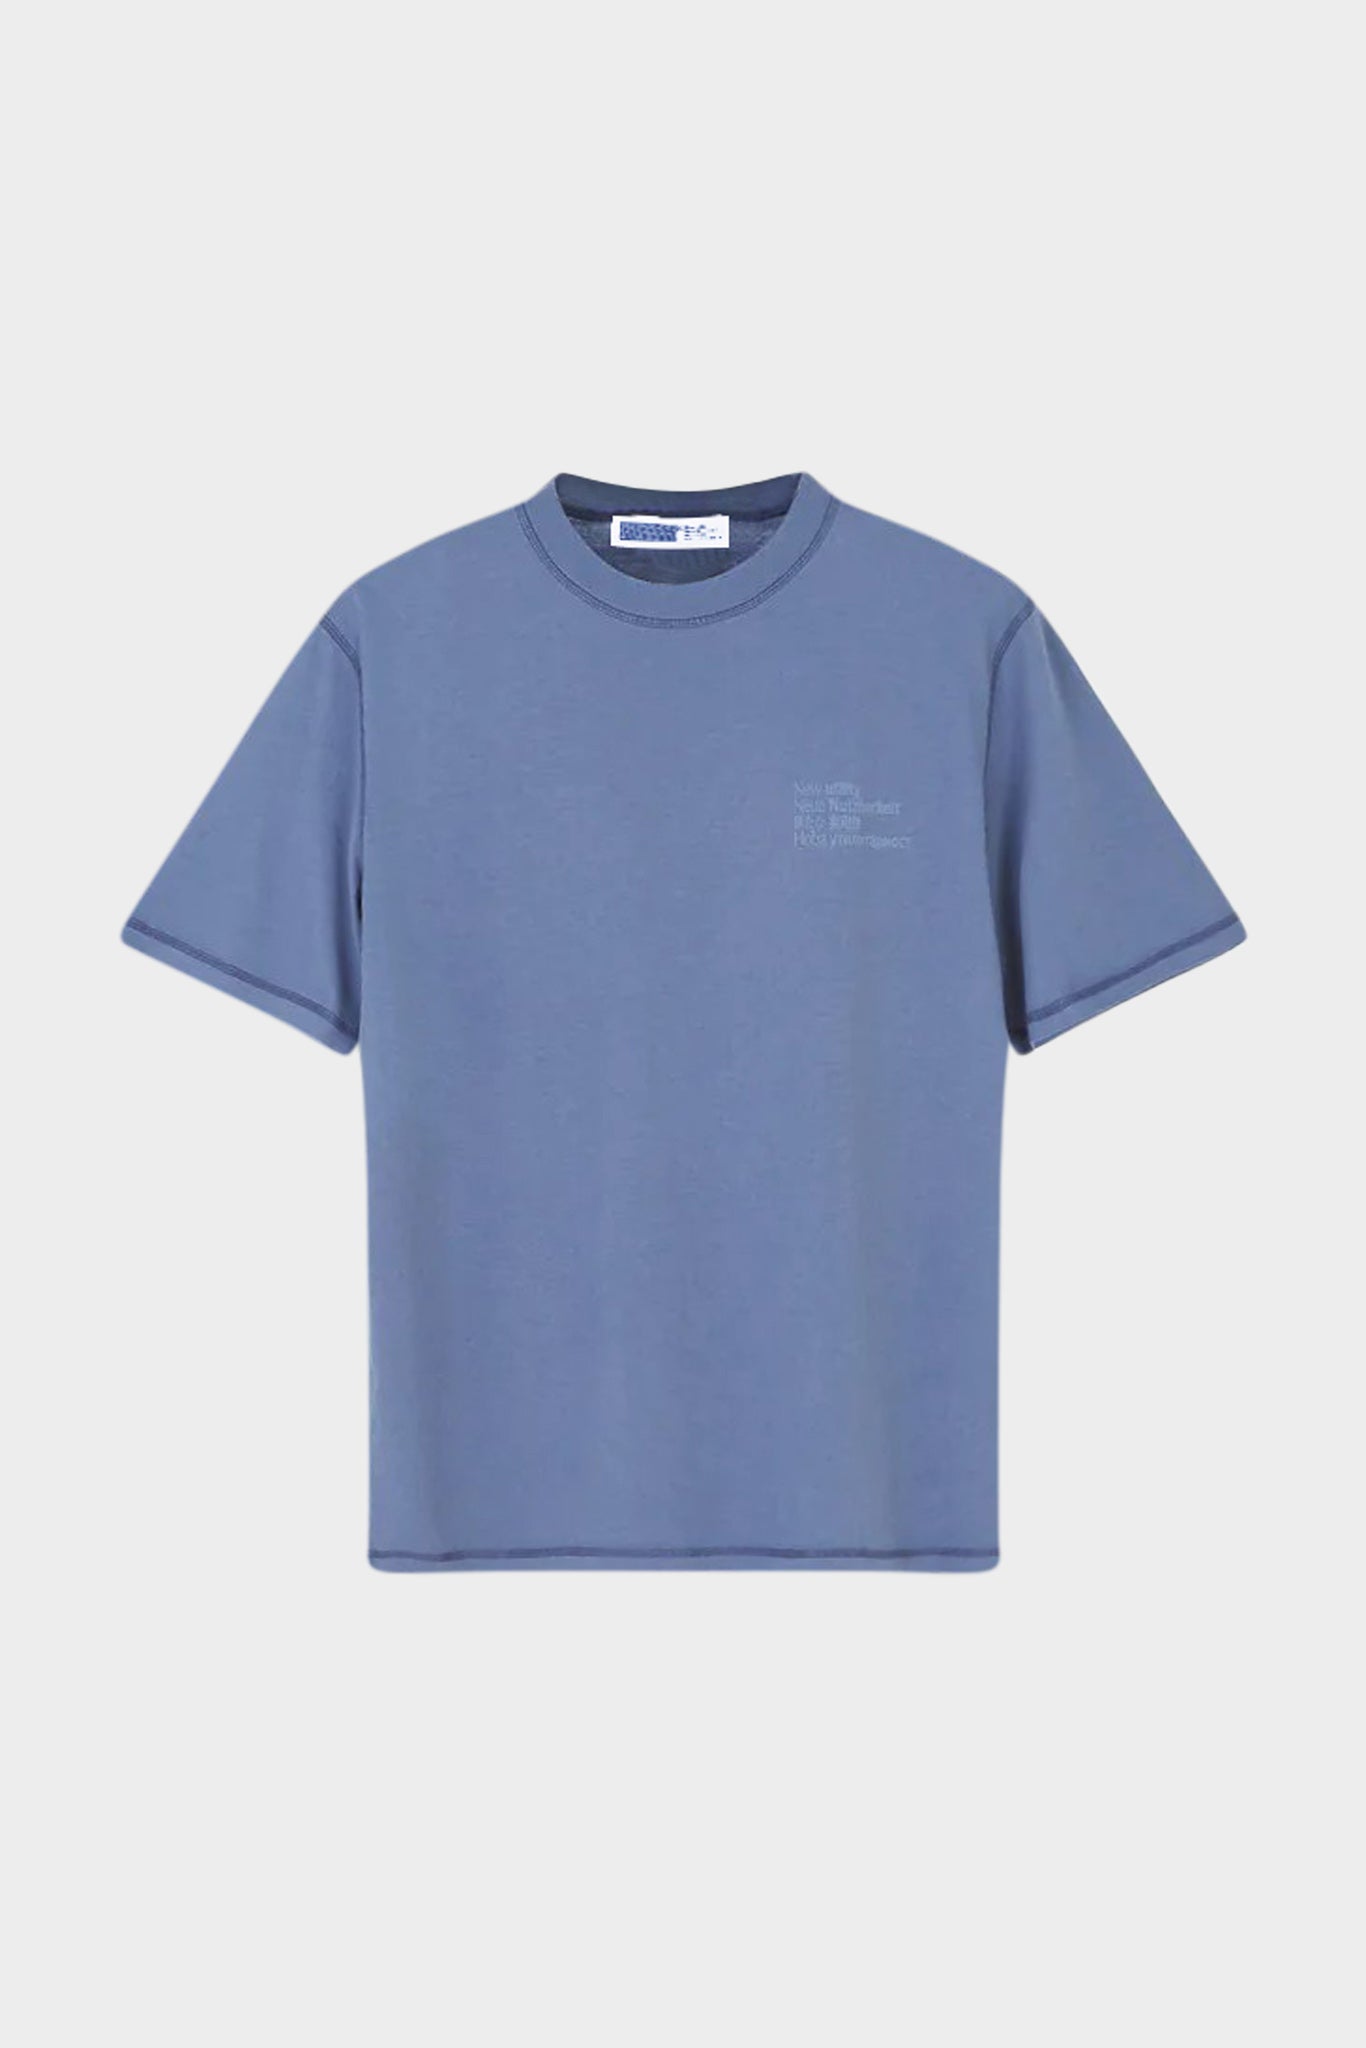 Selectshop FRAME - AFFIX Humility Tee T-Shirts Dubai